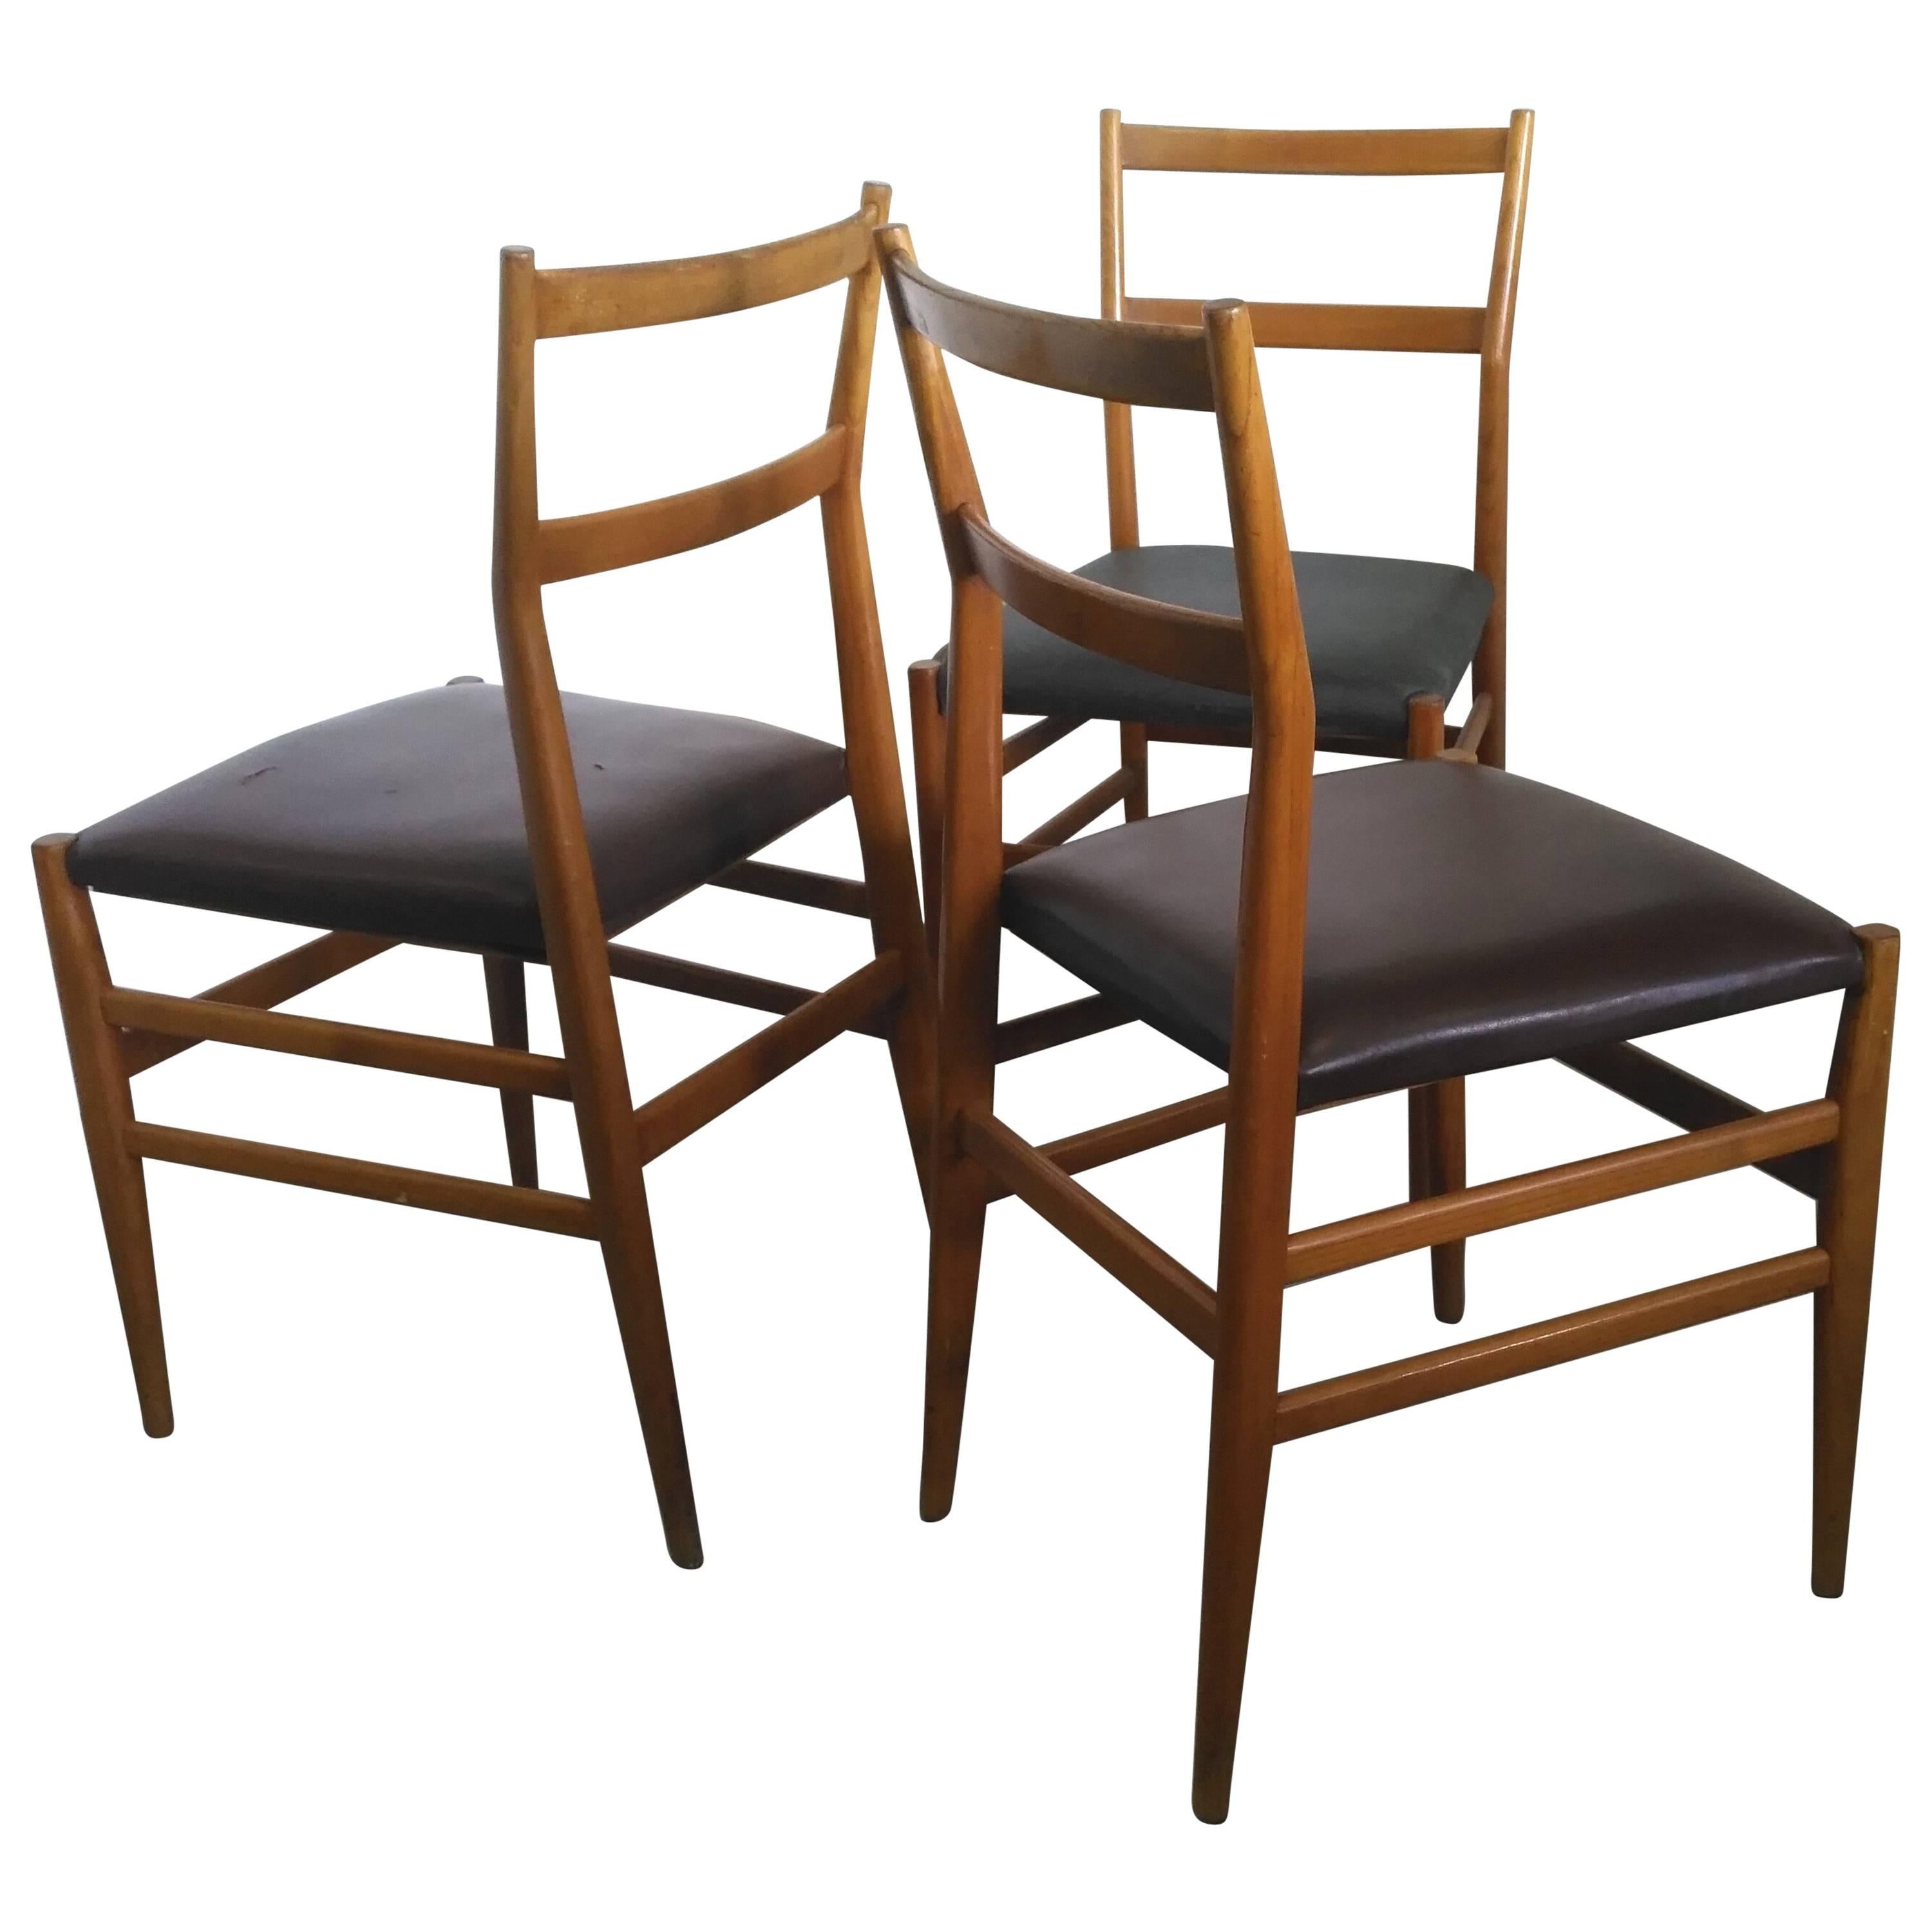 Three “Leggera 646” Chairs by Gio Ponti for Cassina, 1951